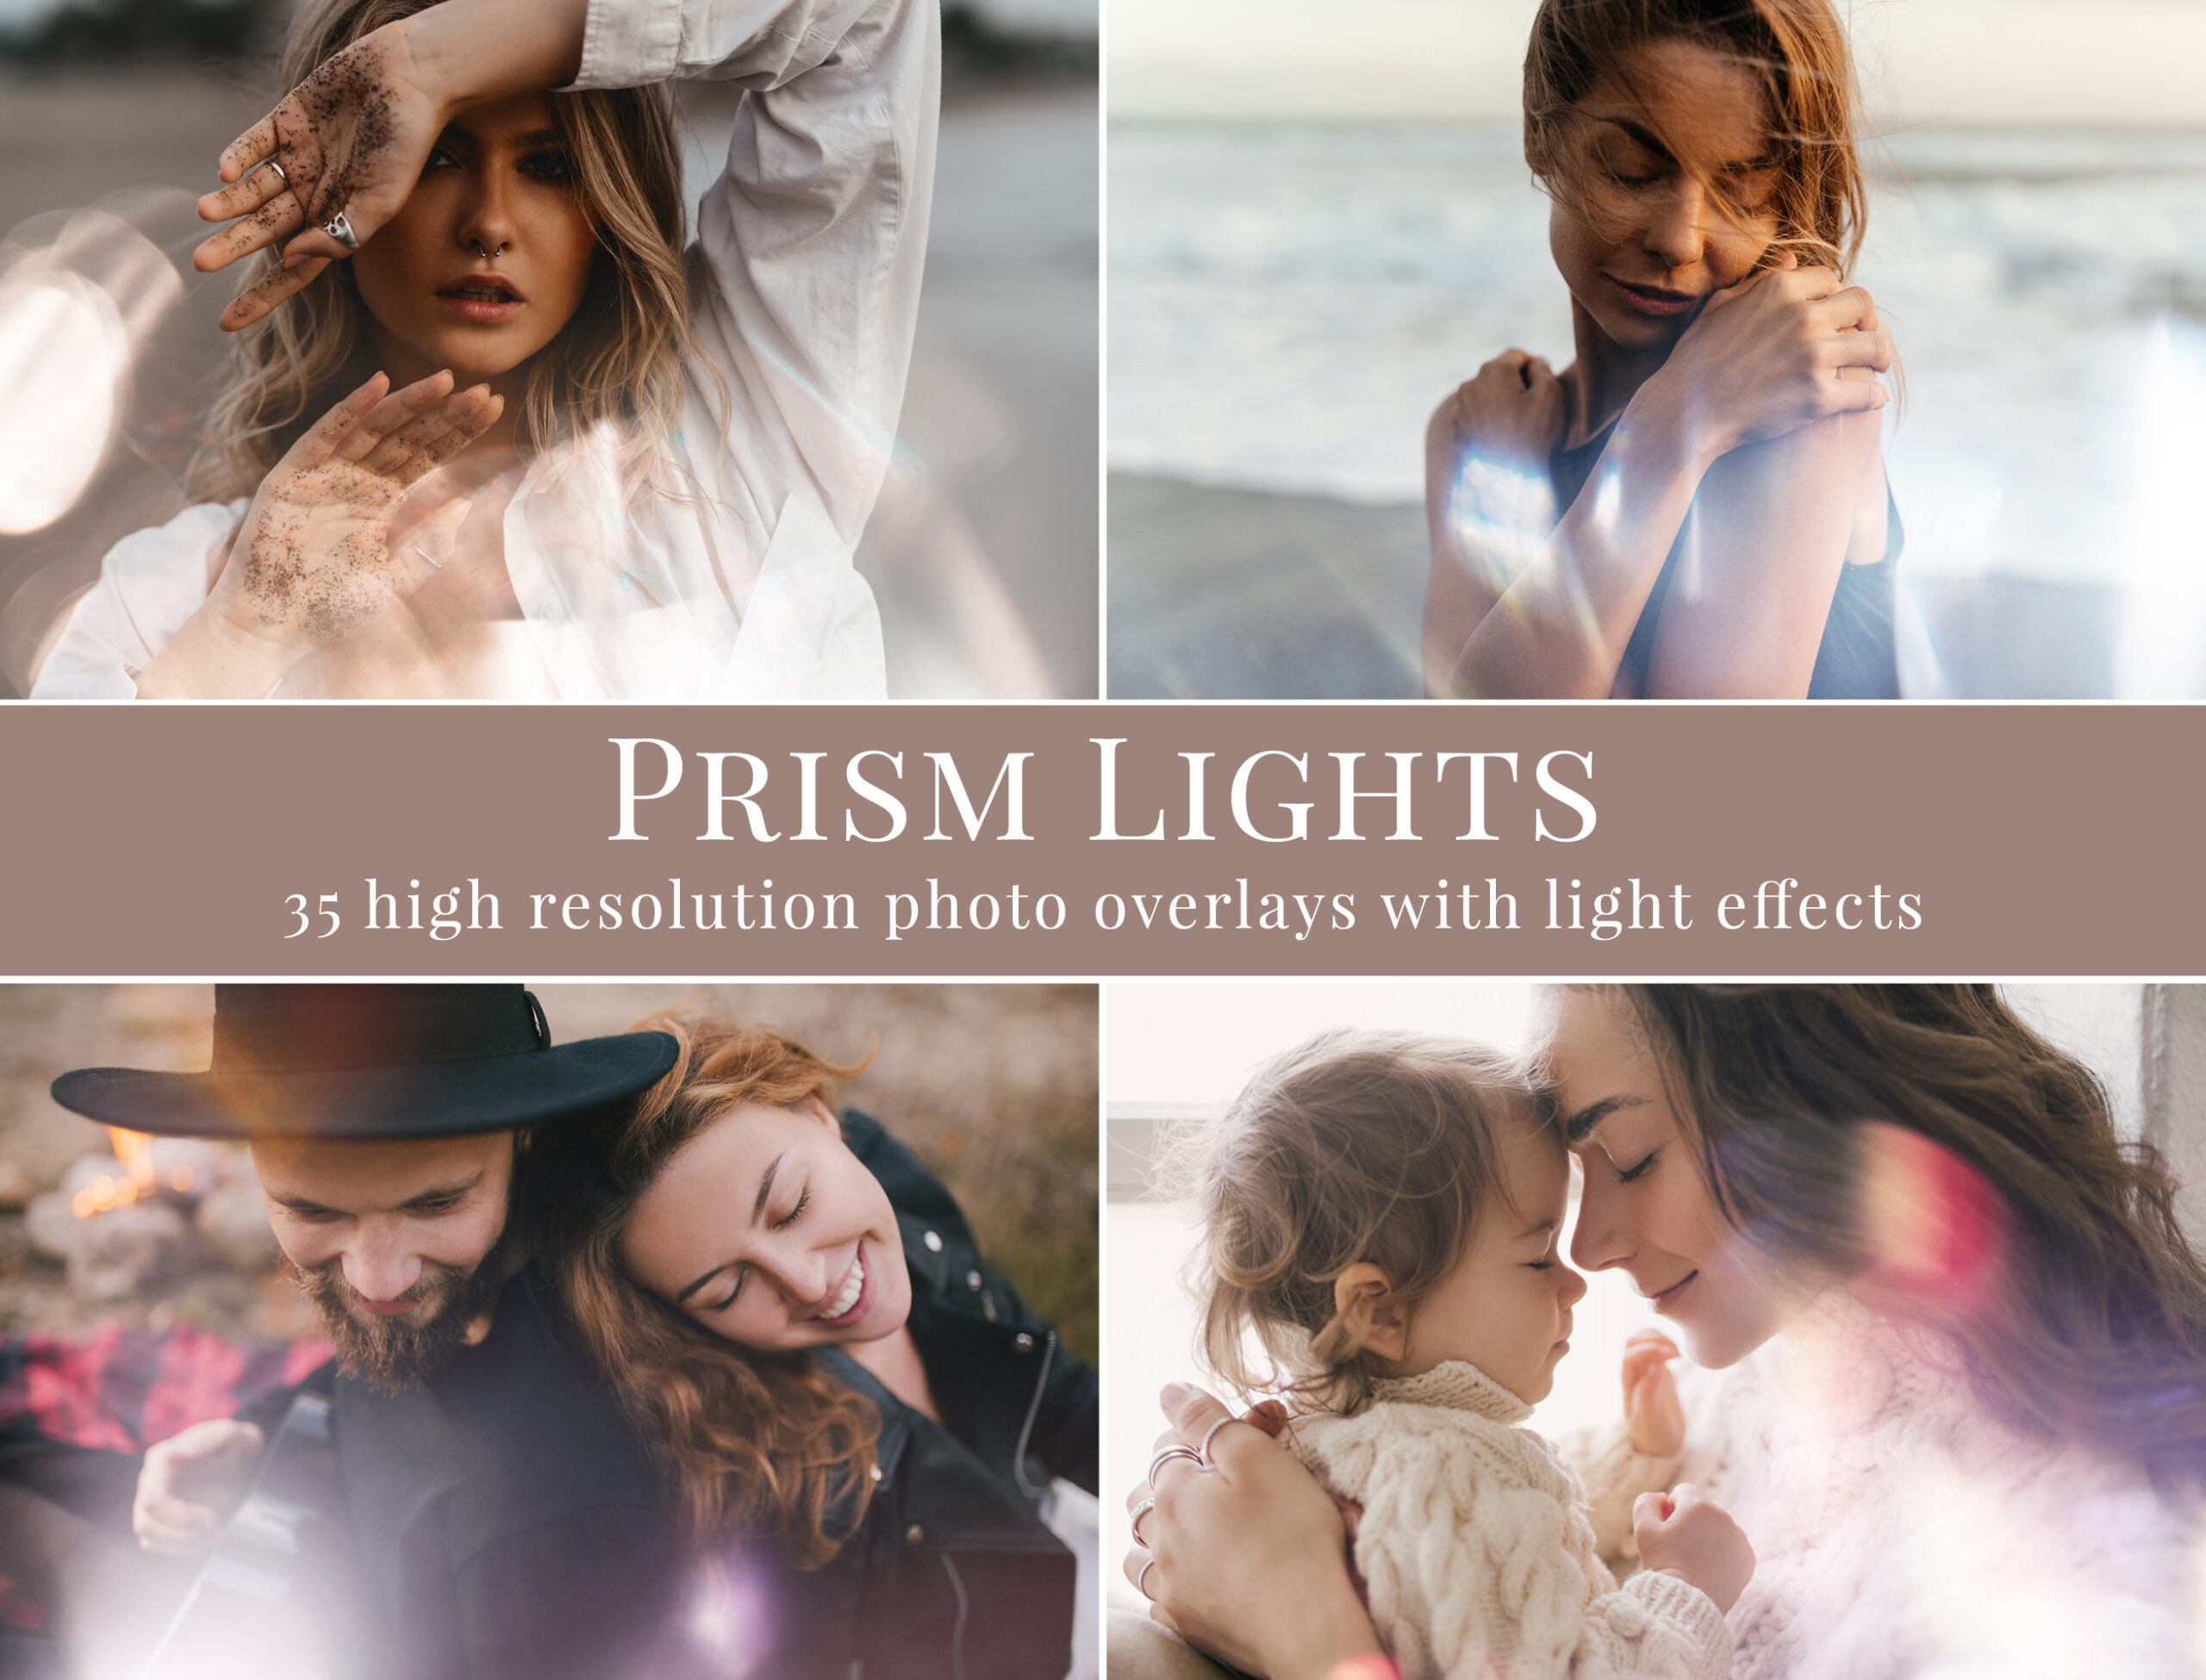 Prism Lights photo overlays